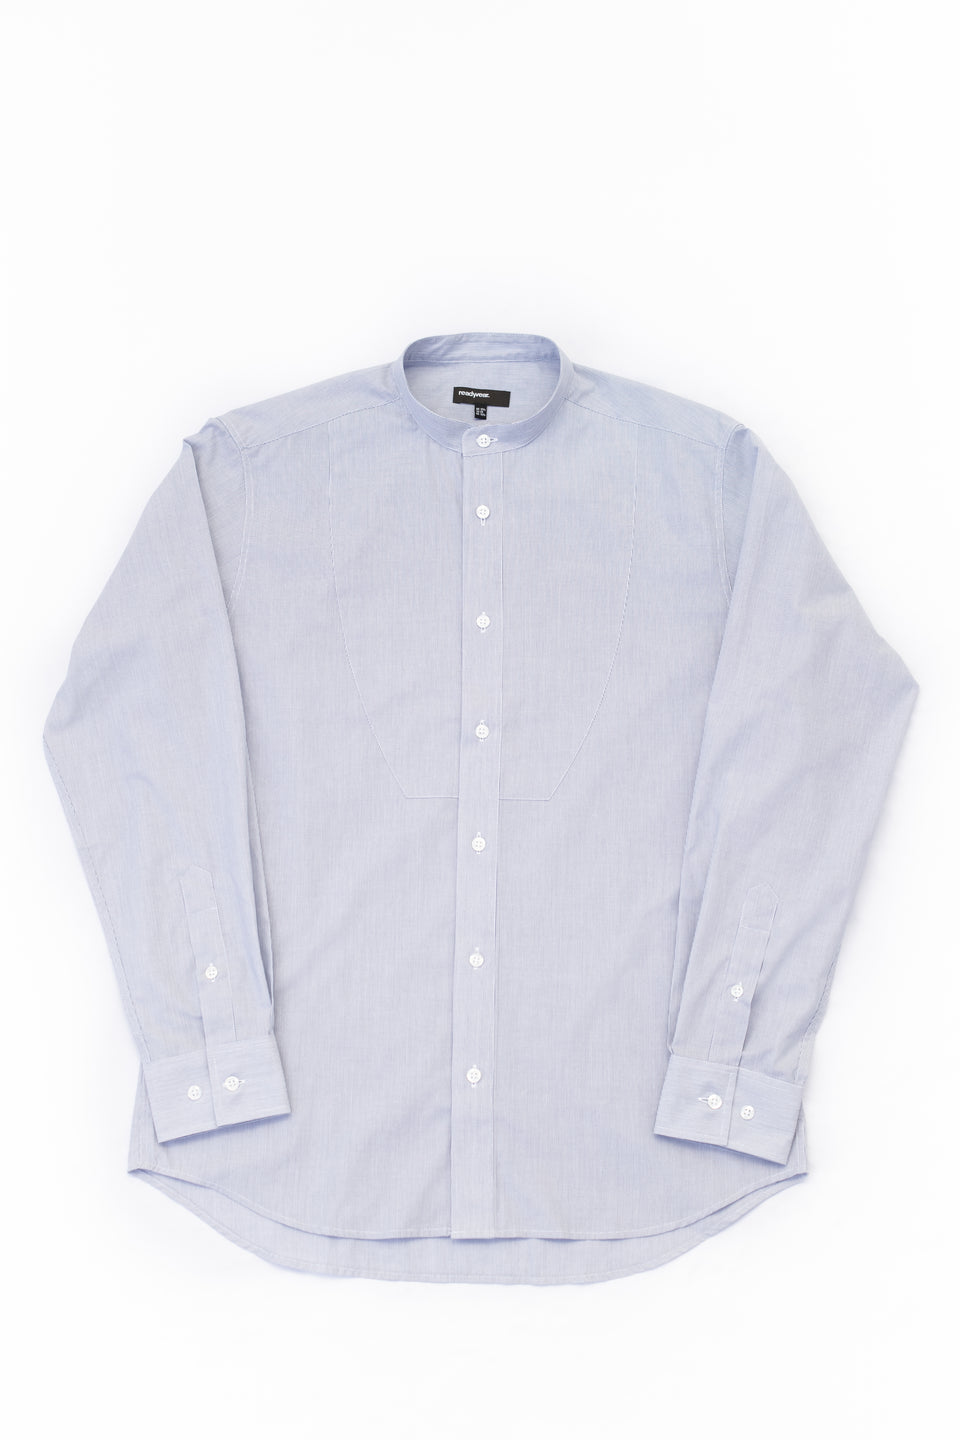 LOT 10: Male Plain Bib Shirt in Blue Micro Stripe